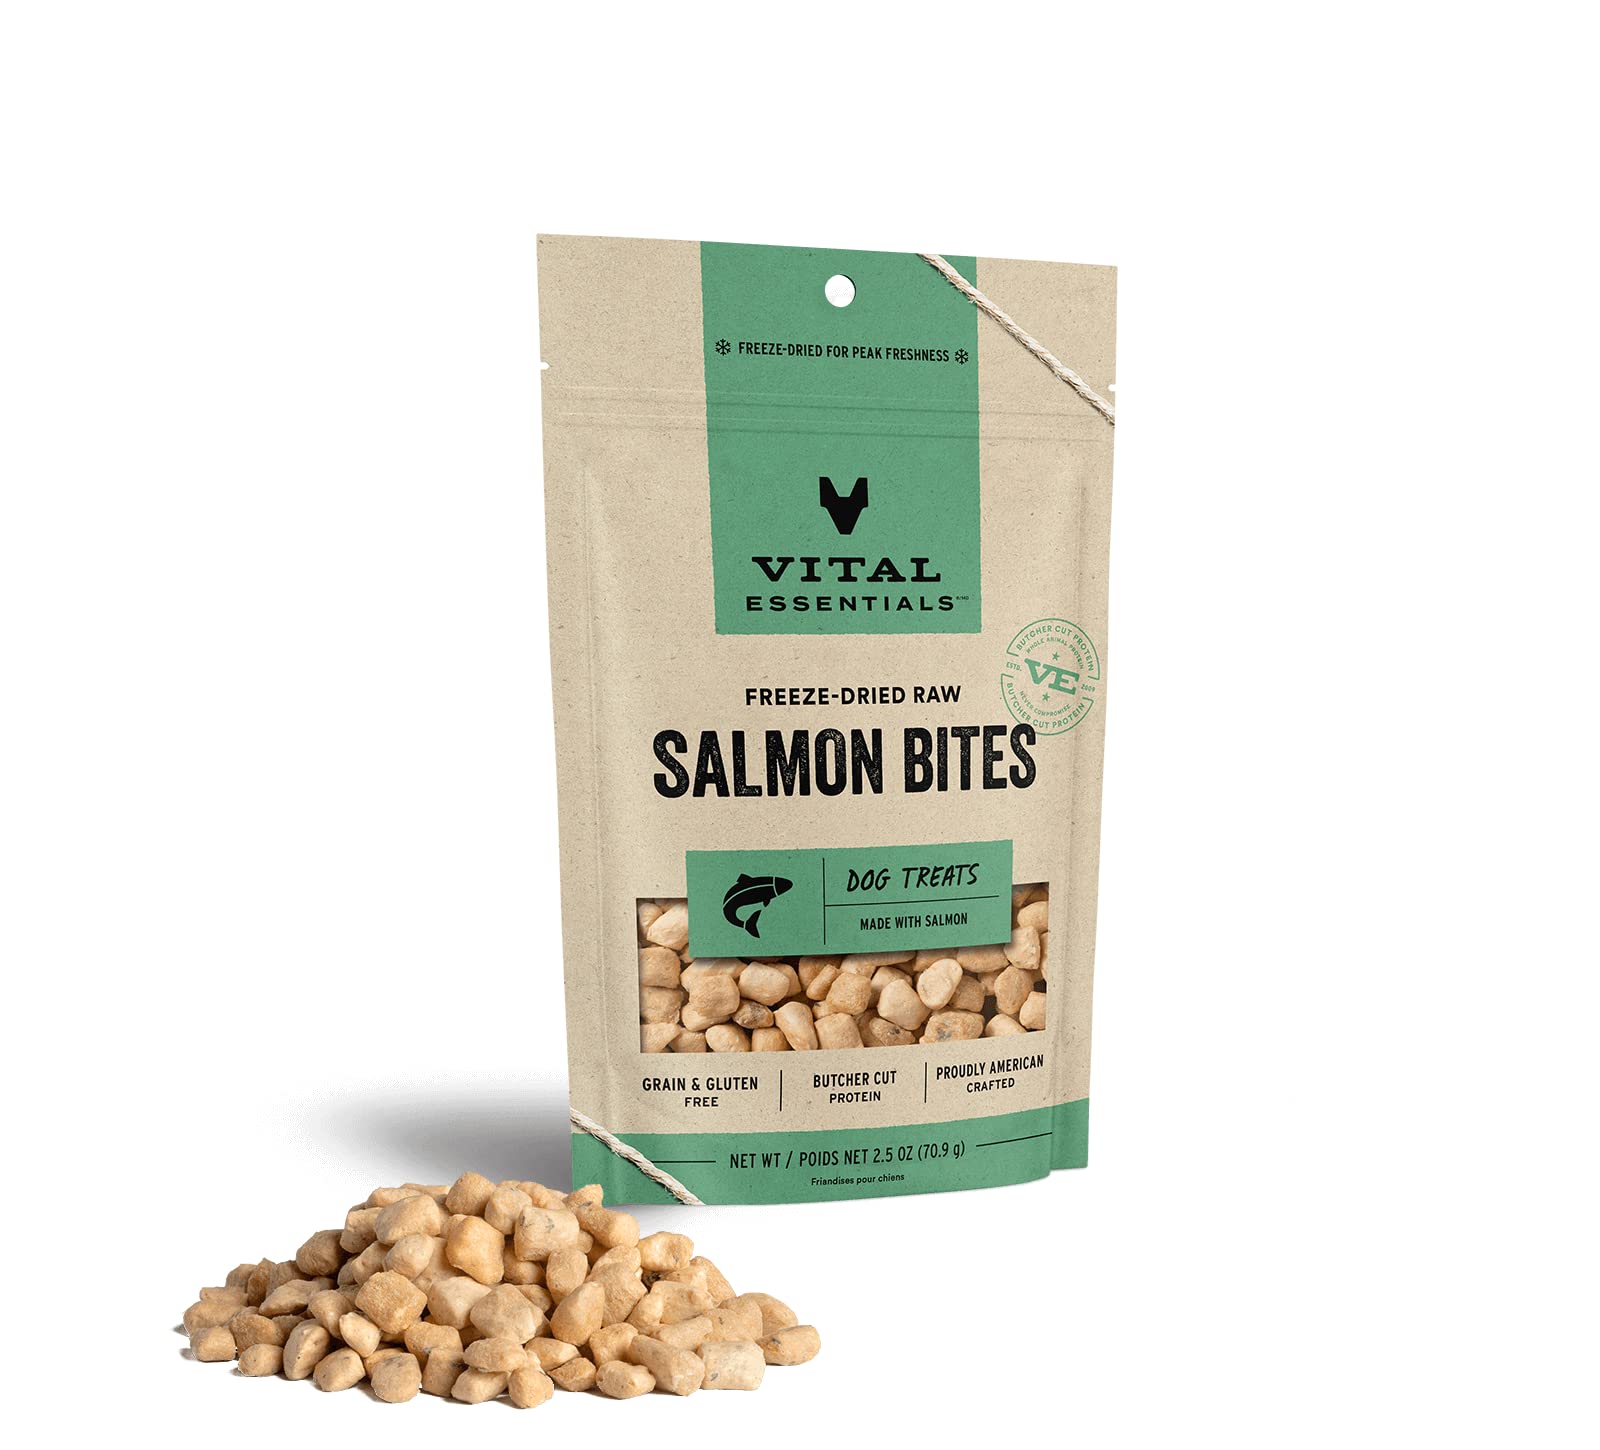 [S&S] $4.75: 2.5-Oz Vital Essentials Freeze Dried Raw Salmon Bites Dog Treats at Amazon